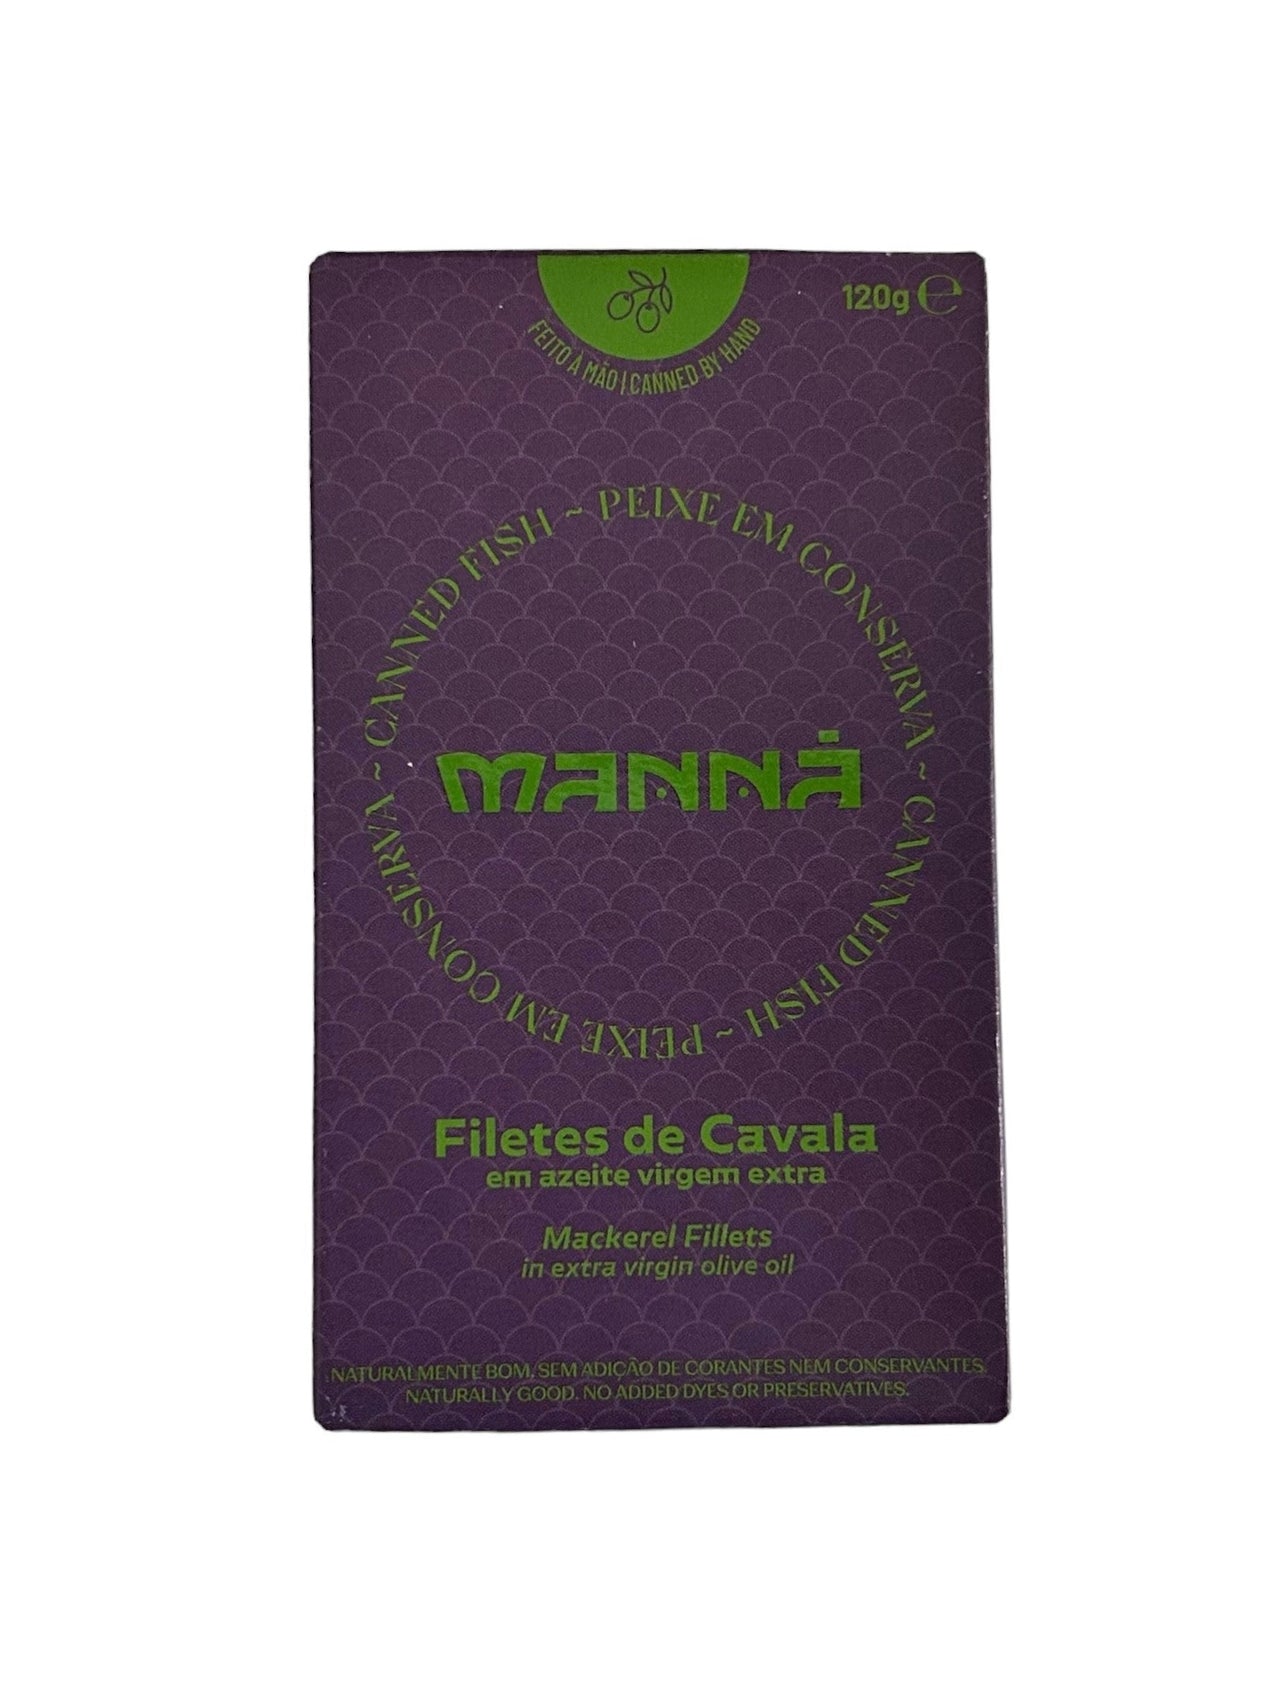 Manná Mackerel Fillets in Extra Virgin Olive Oil - 6 Pack - TinCanFish